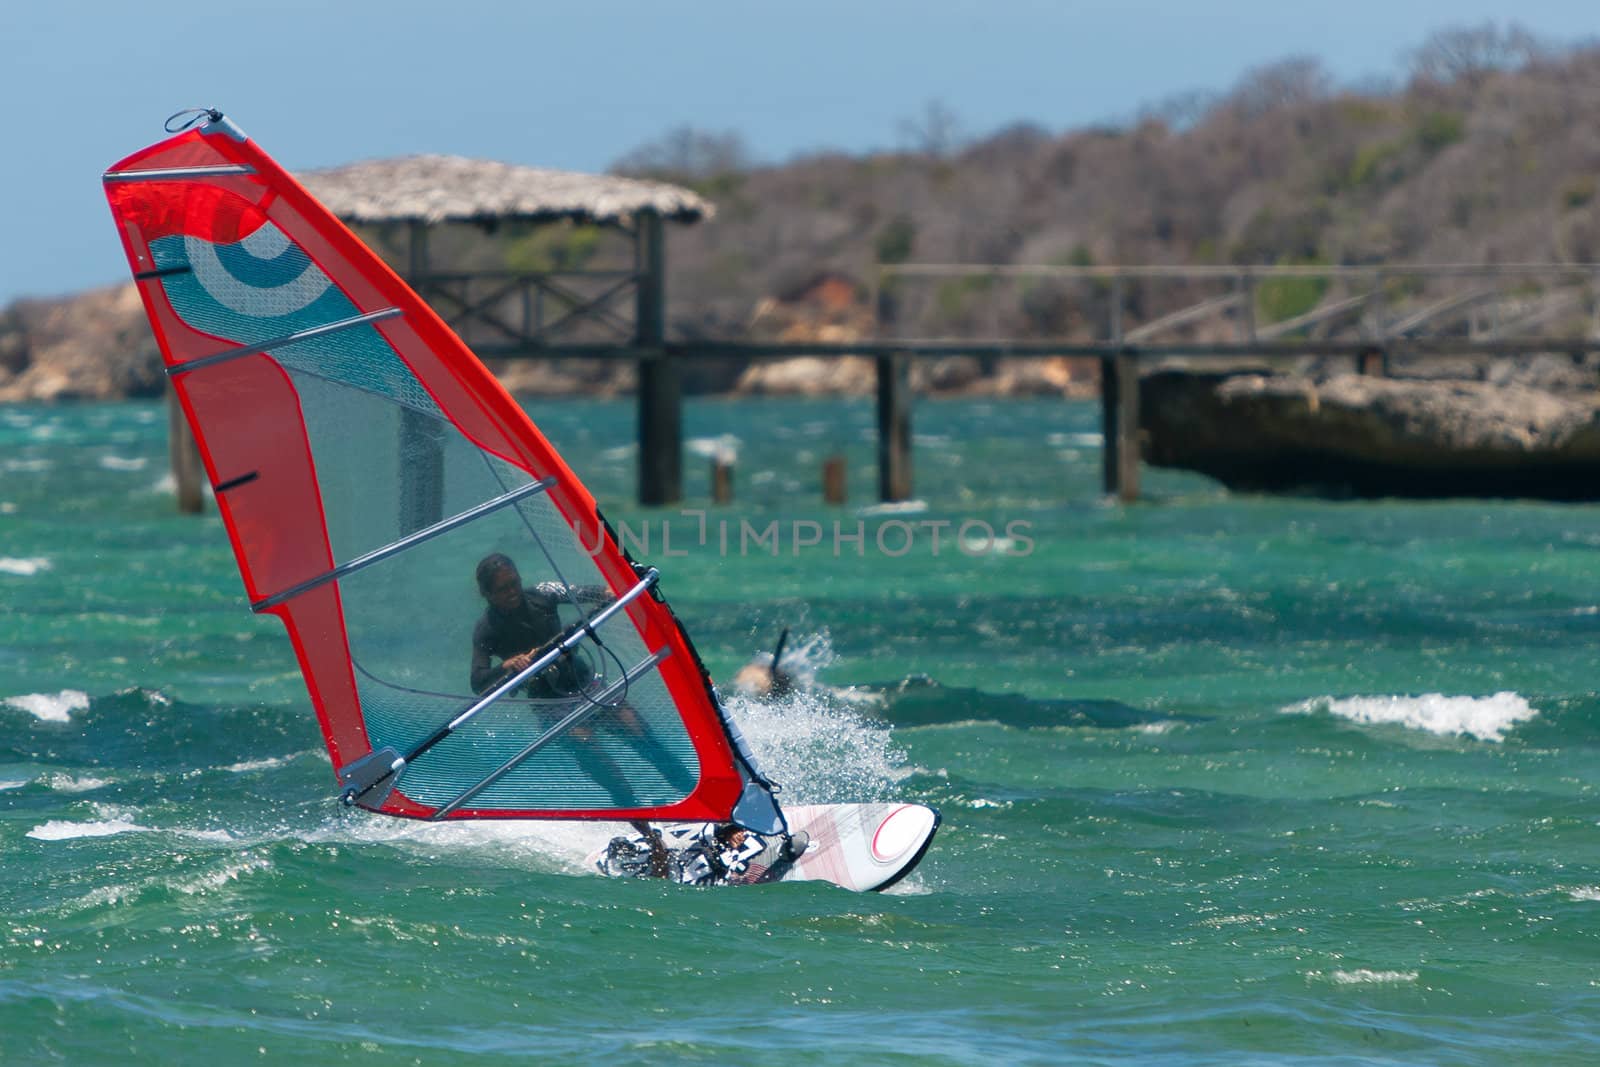 Windsurf in the lagoon by pierivb